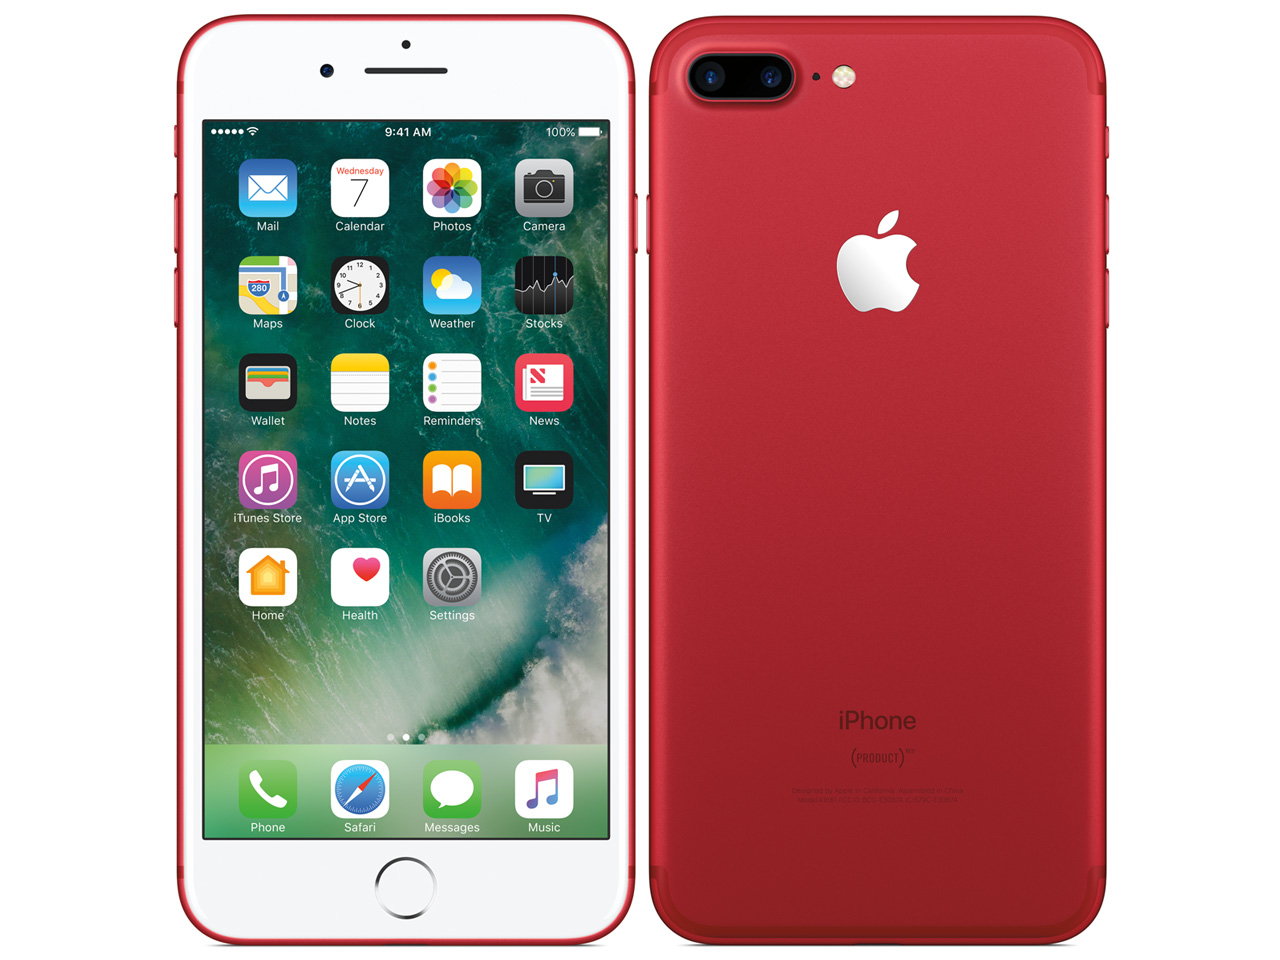 iPhone 7 Plus (PRODUCT)RED Special Edition 256GB SIMフリー [レッド] (SIMフリー)